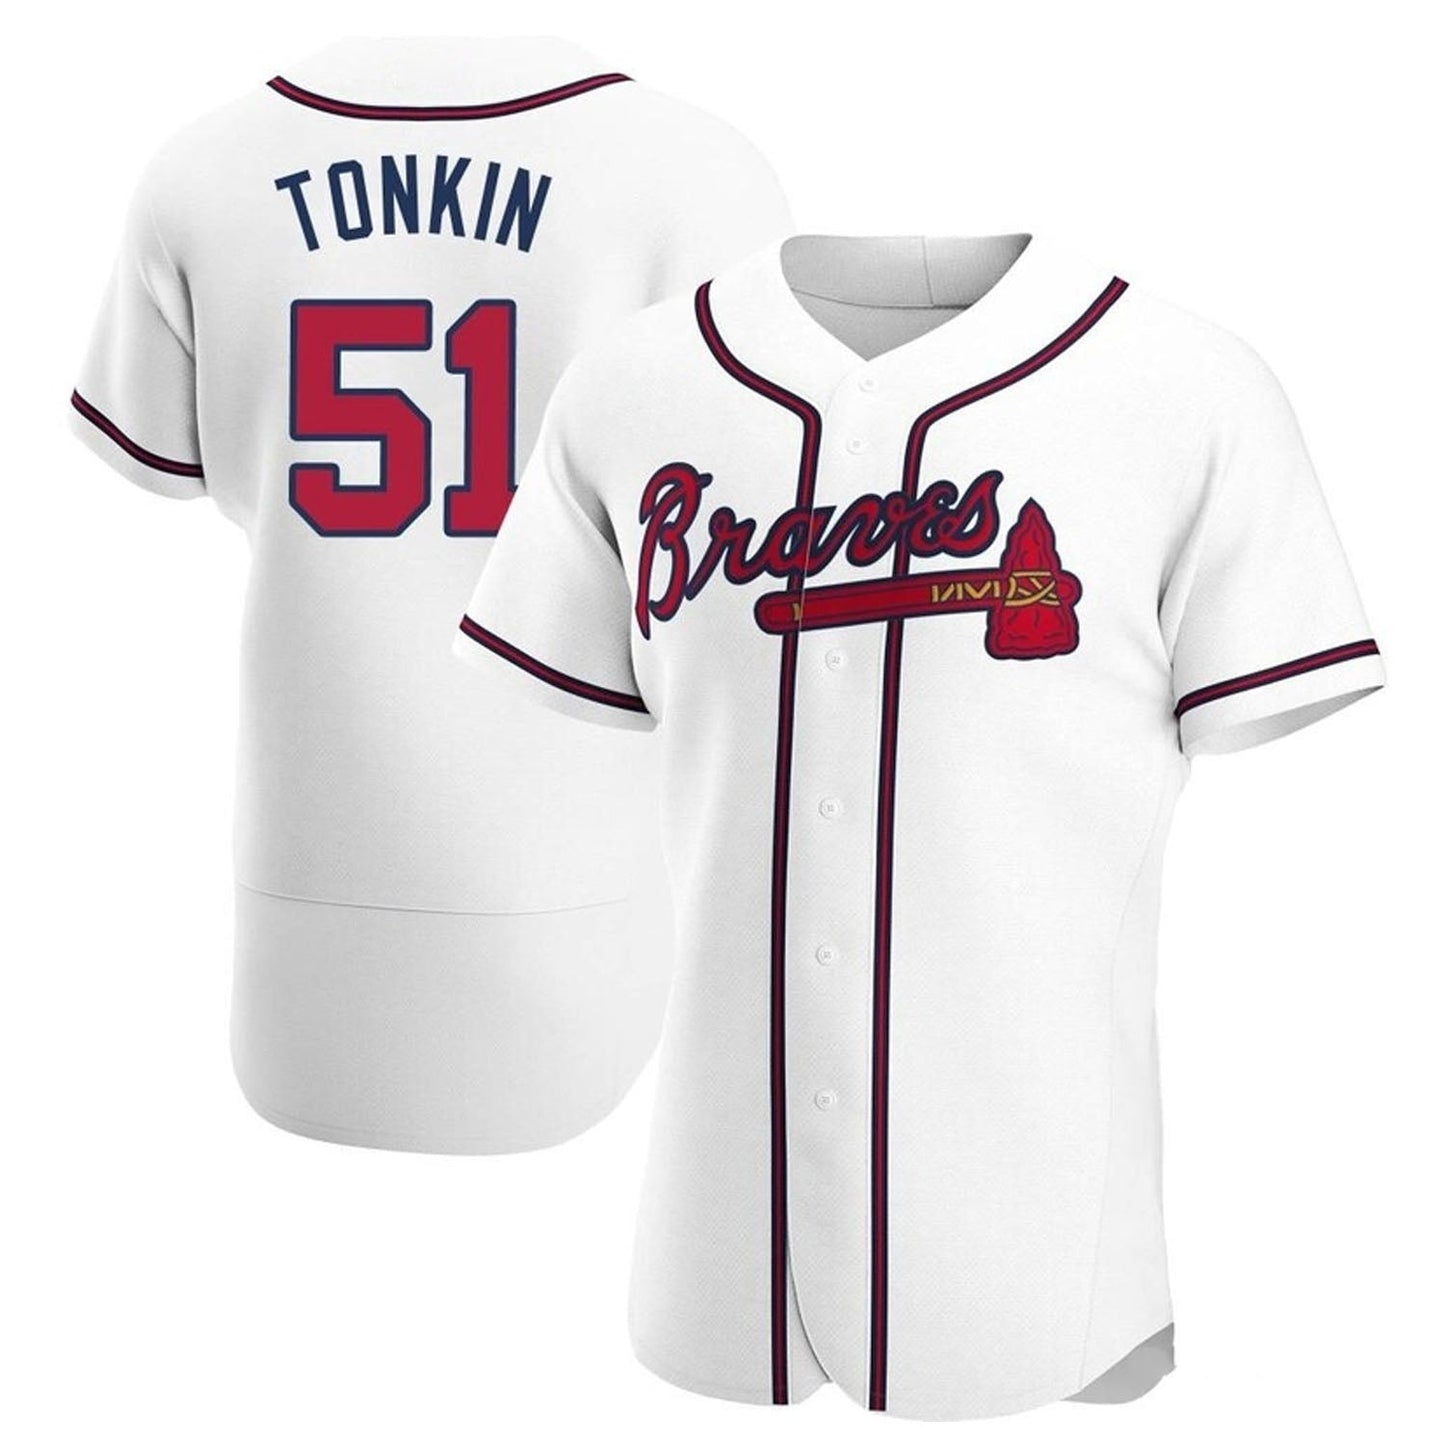 MLB Michael Tonkin Atlanta Braves 51 Jersey